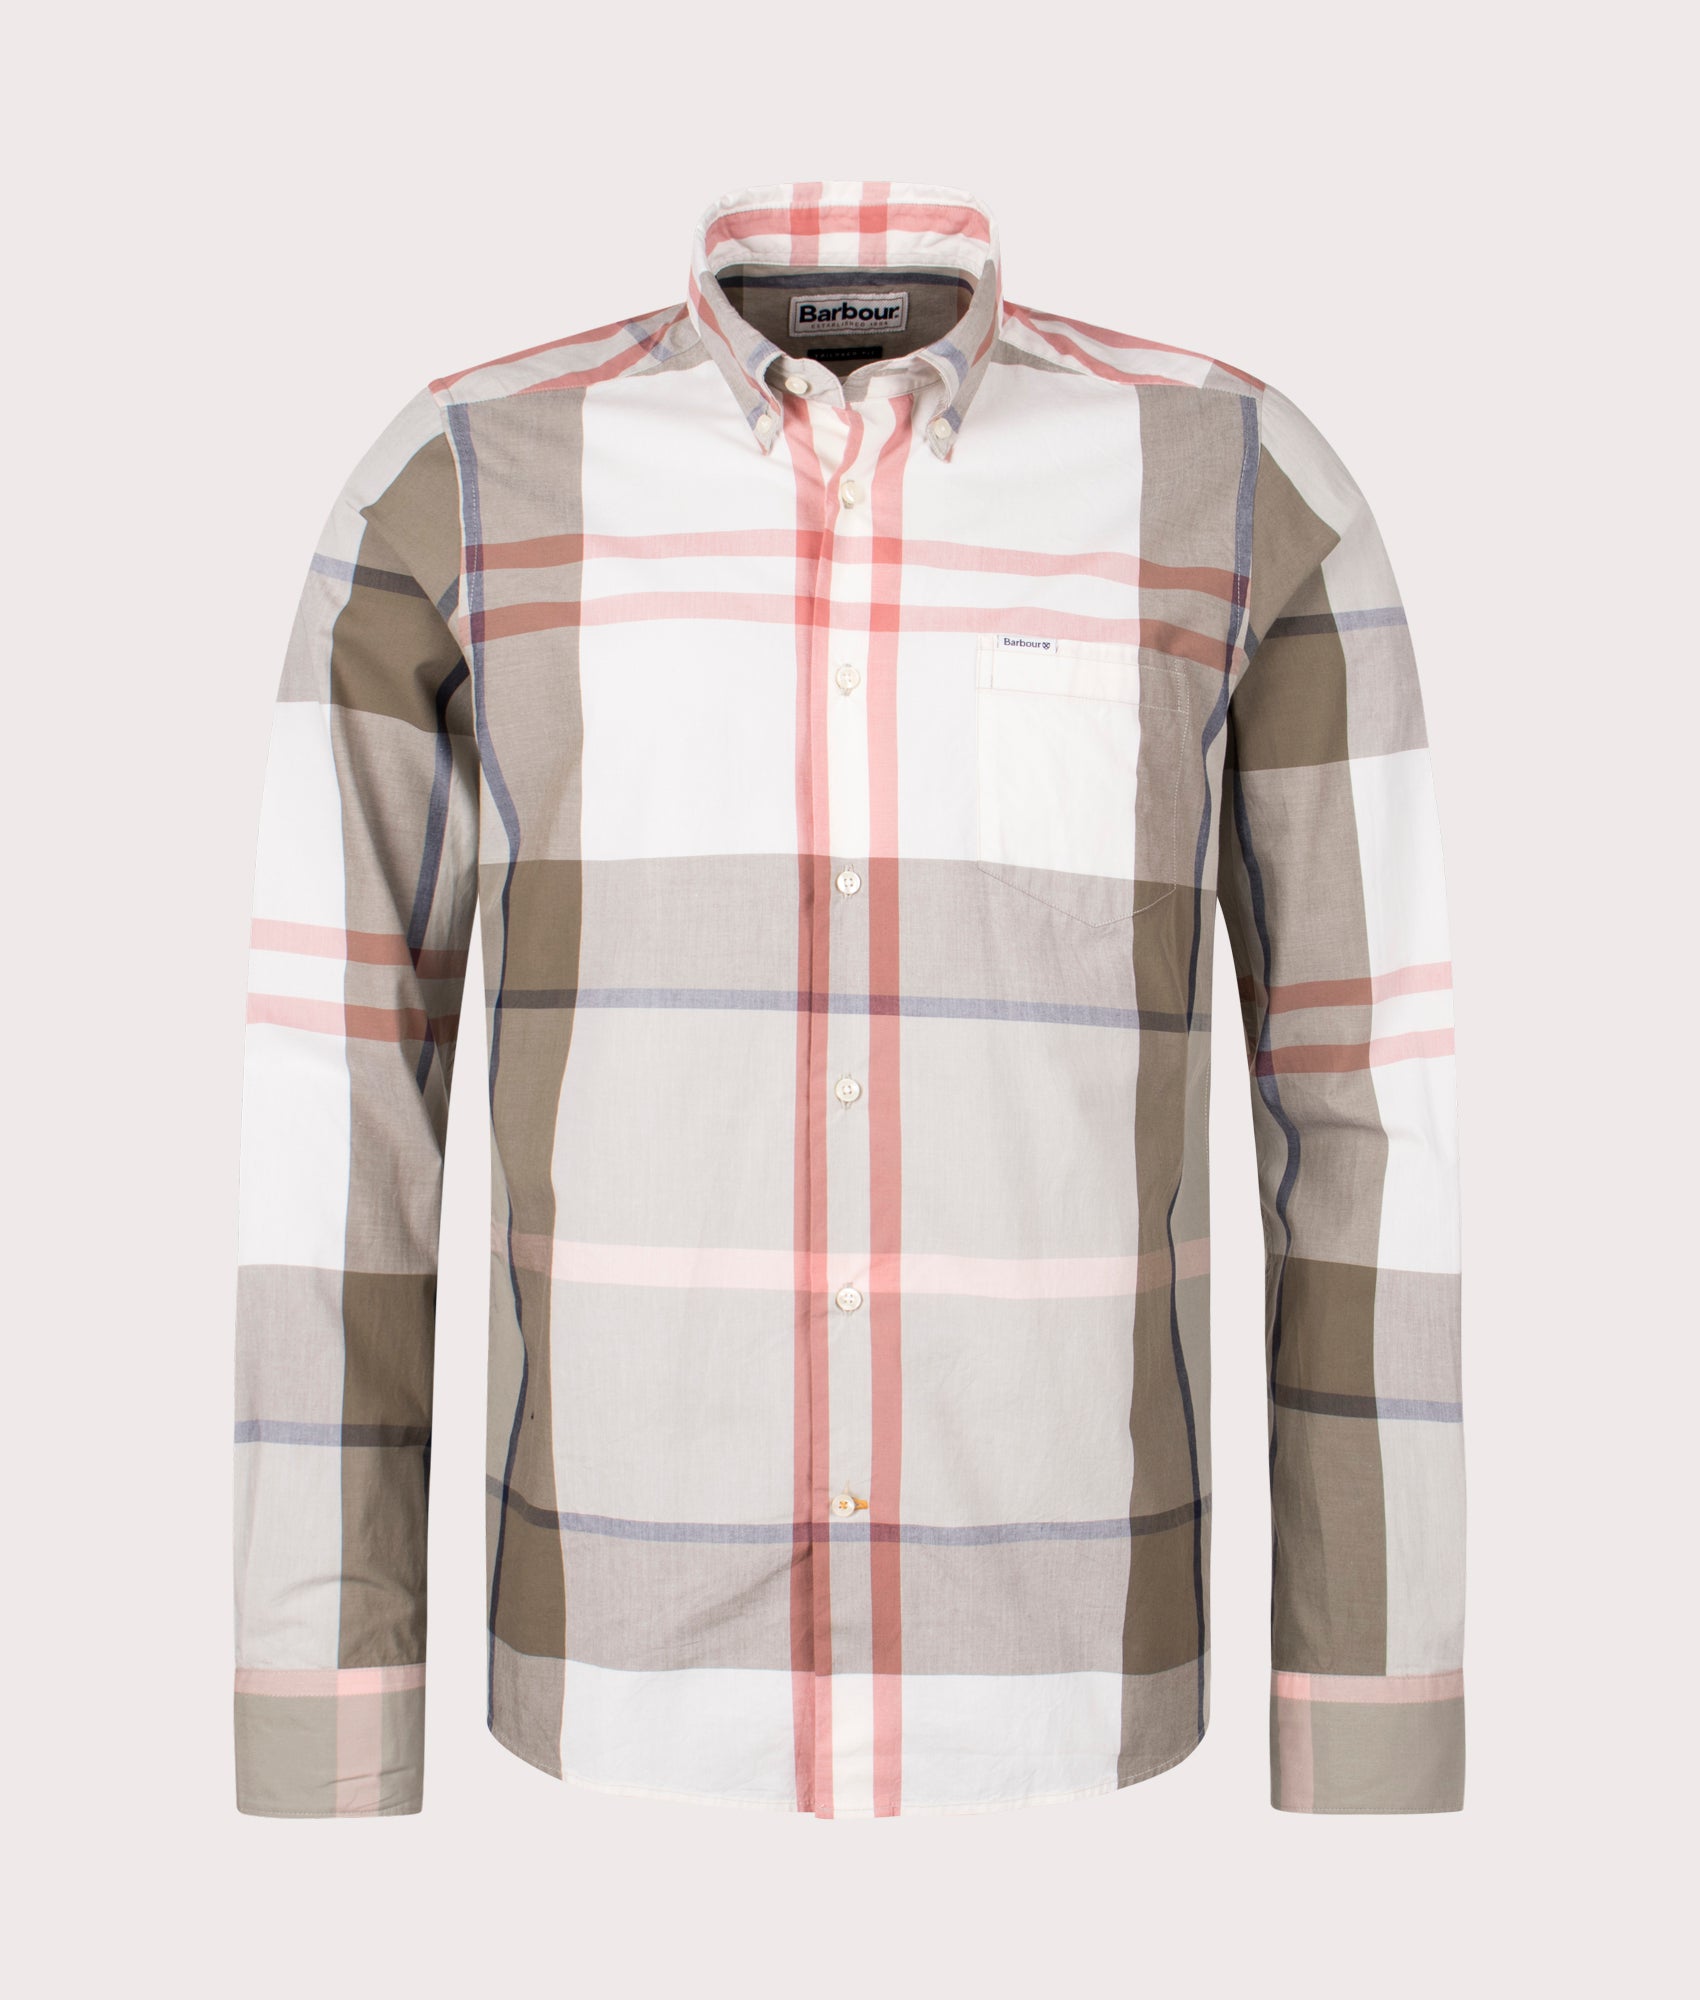 Barbour Lifestyle Mens Harris Shirt - Colour: TN24 Glenmore Olive Tartan - Size: Medium